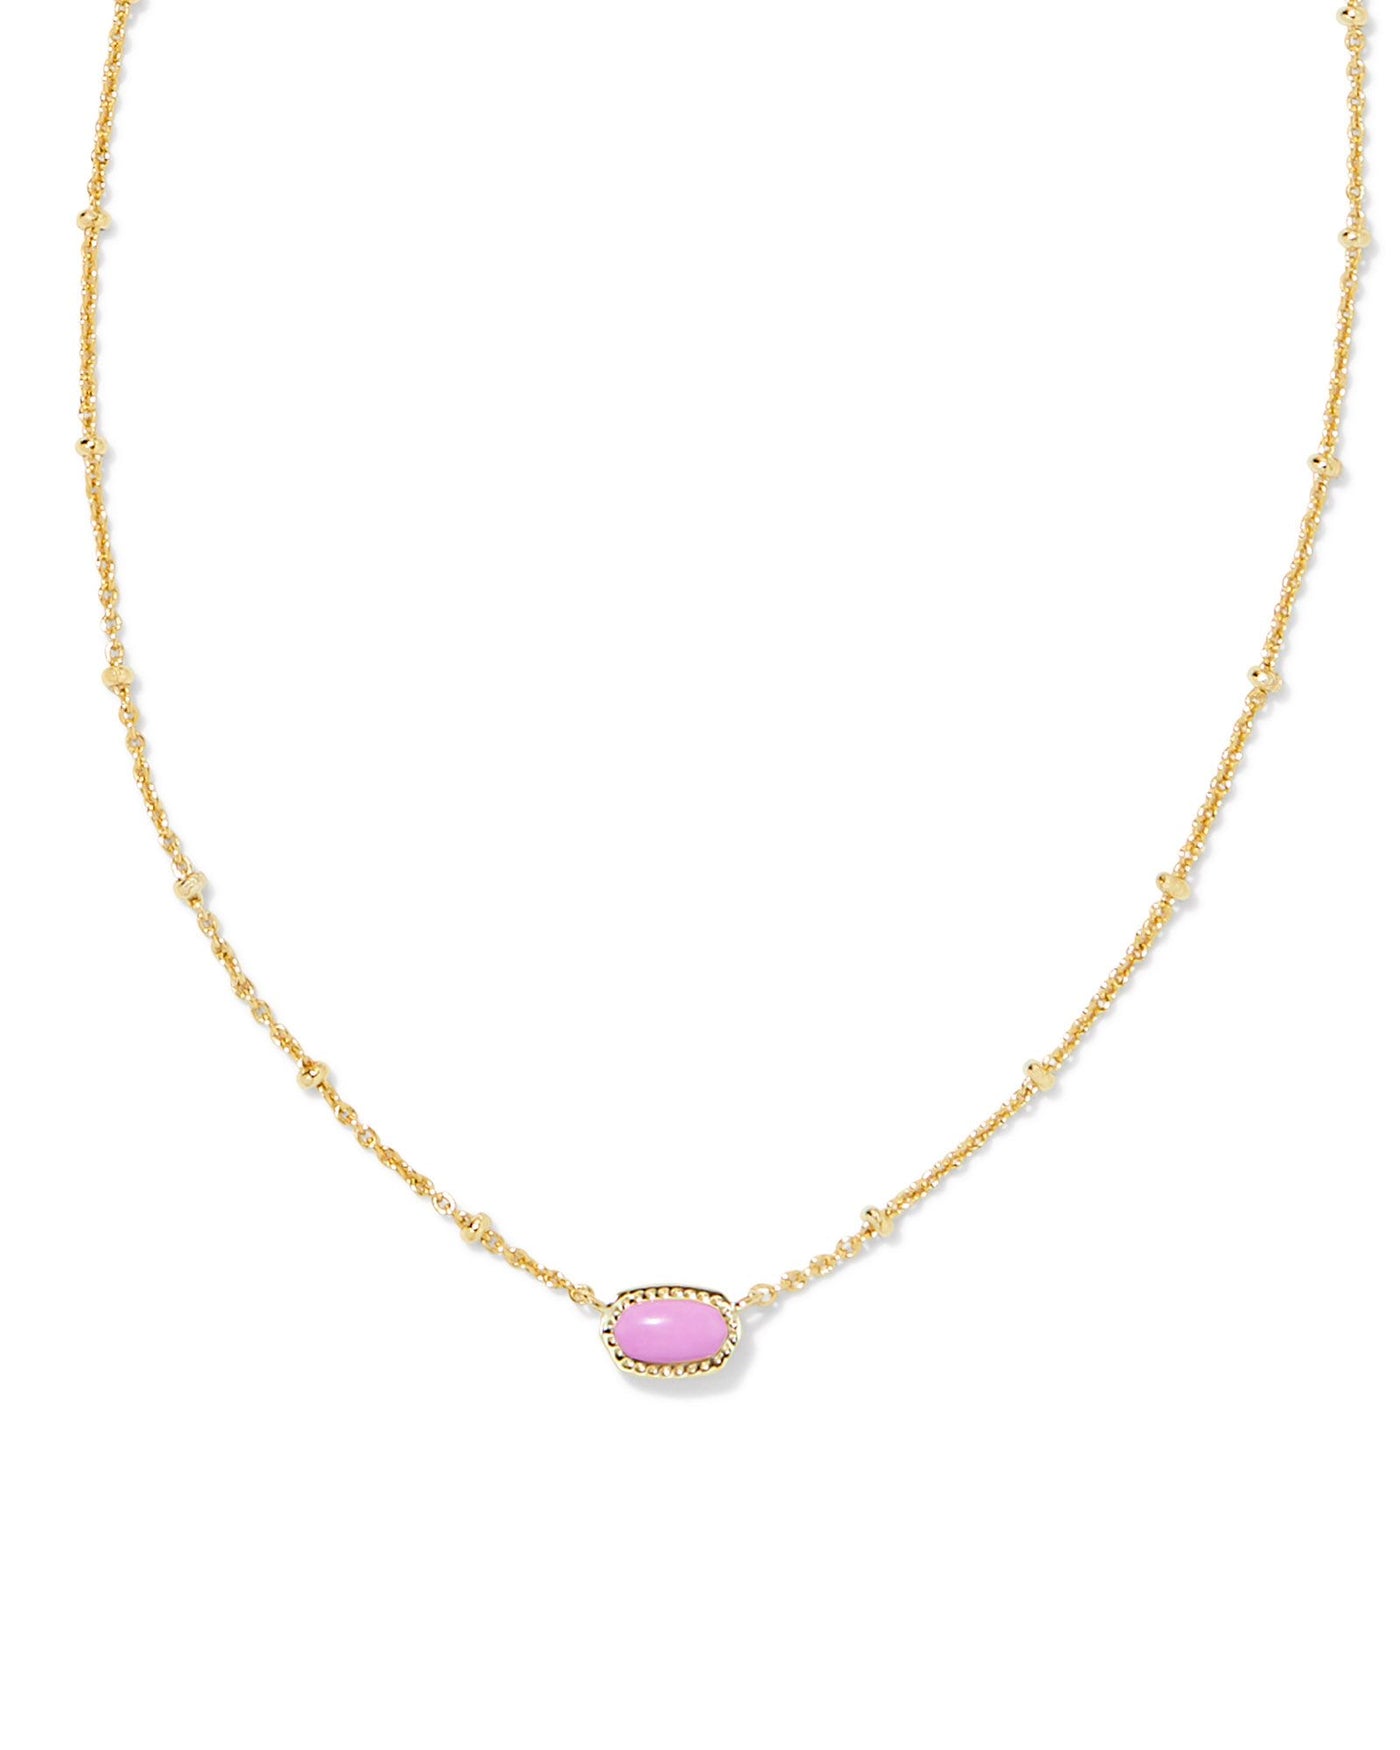 Kendra Scott Mini Elisa Satellite Necklace in Gold Pink Magnesite on white background close up.